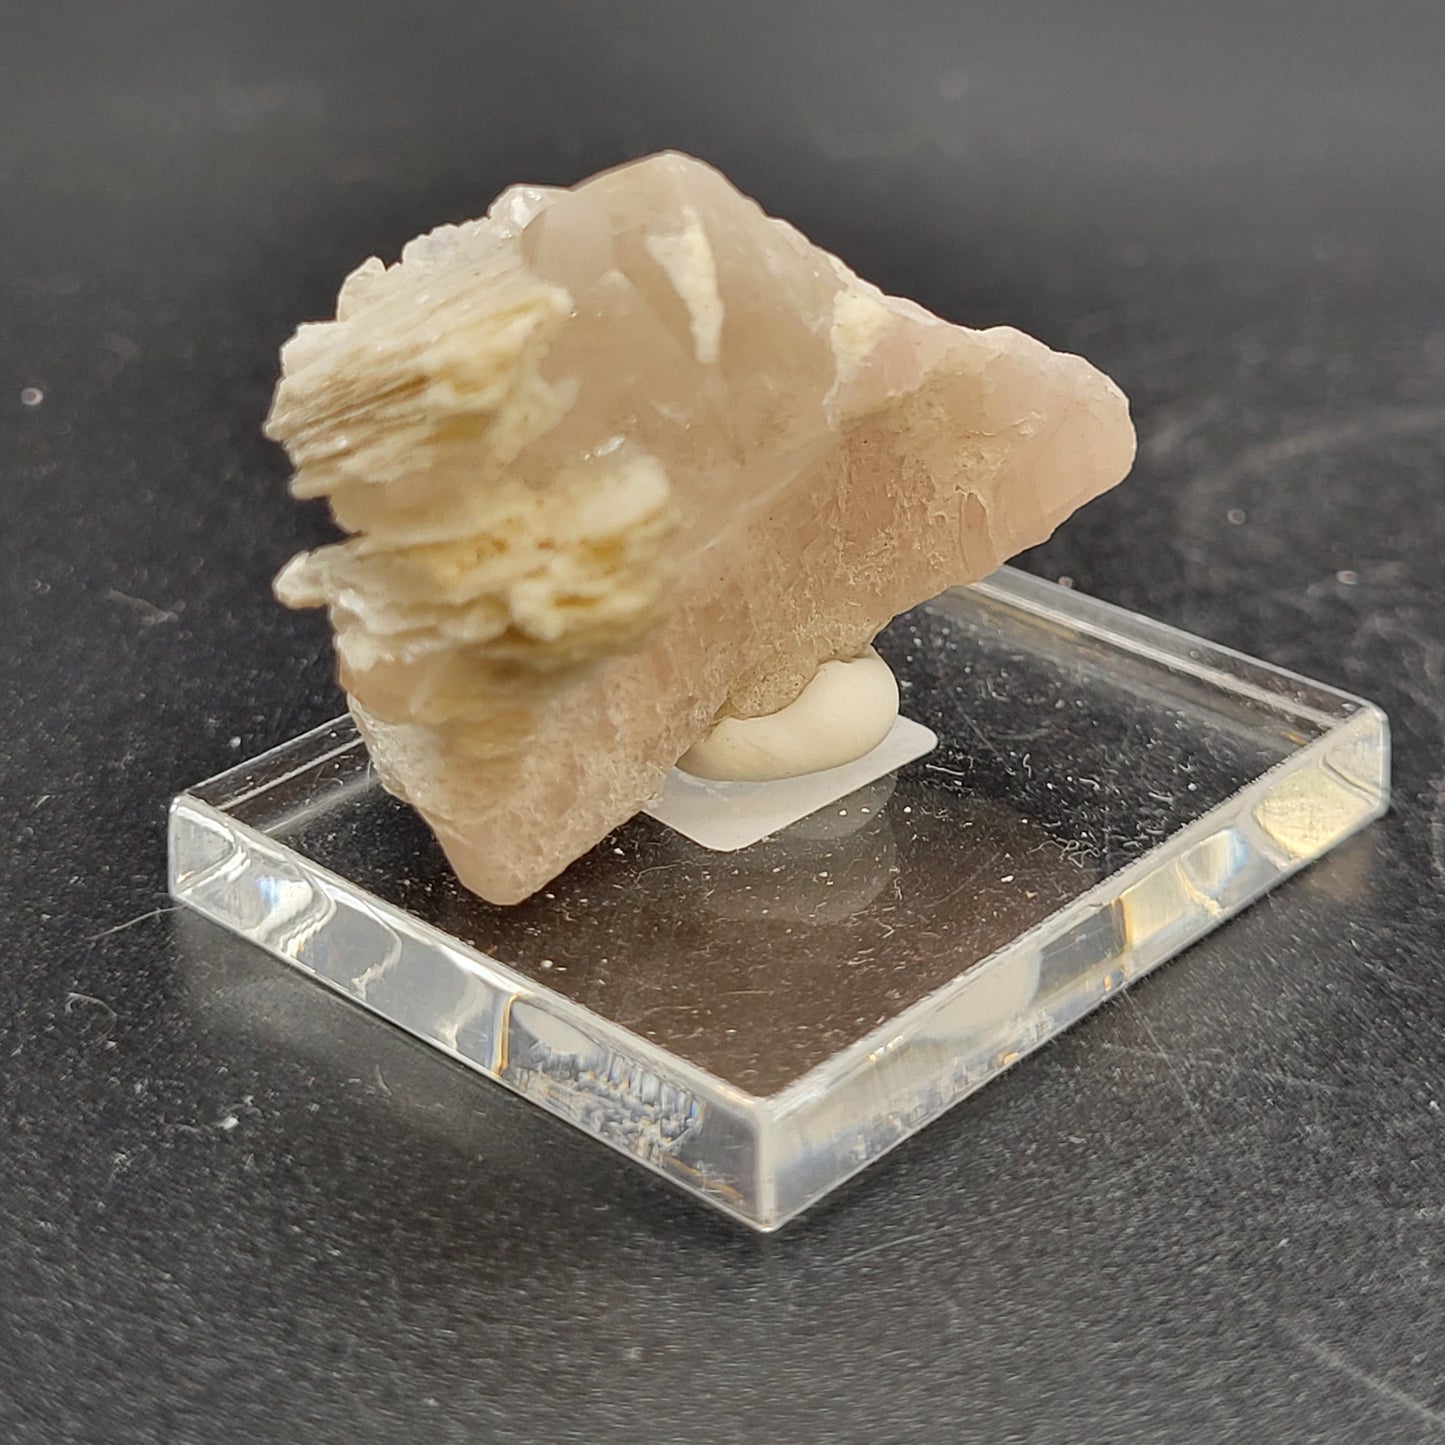 Mixed mineral specimens - Albite, Feldspar, Apophyllite